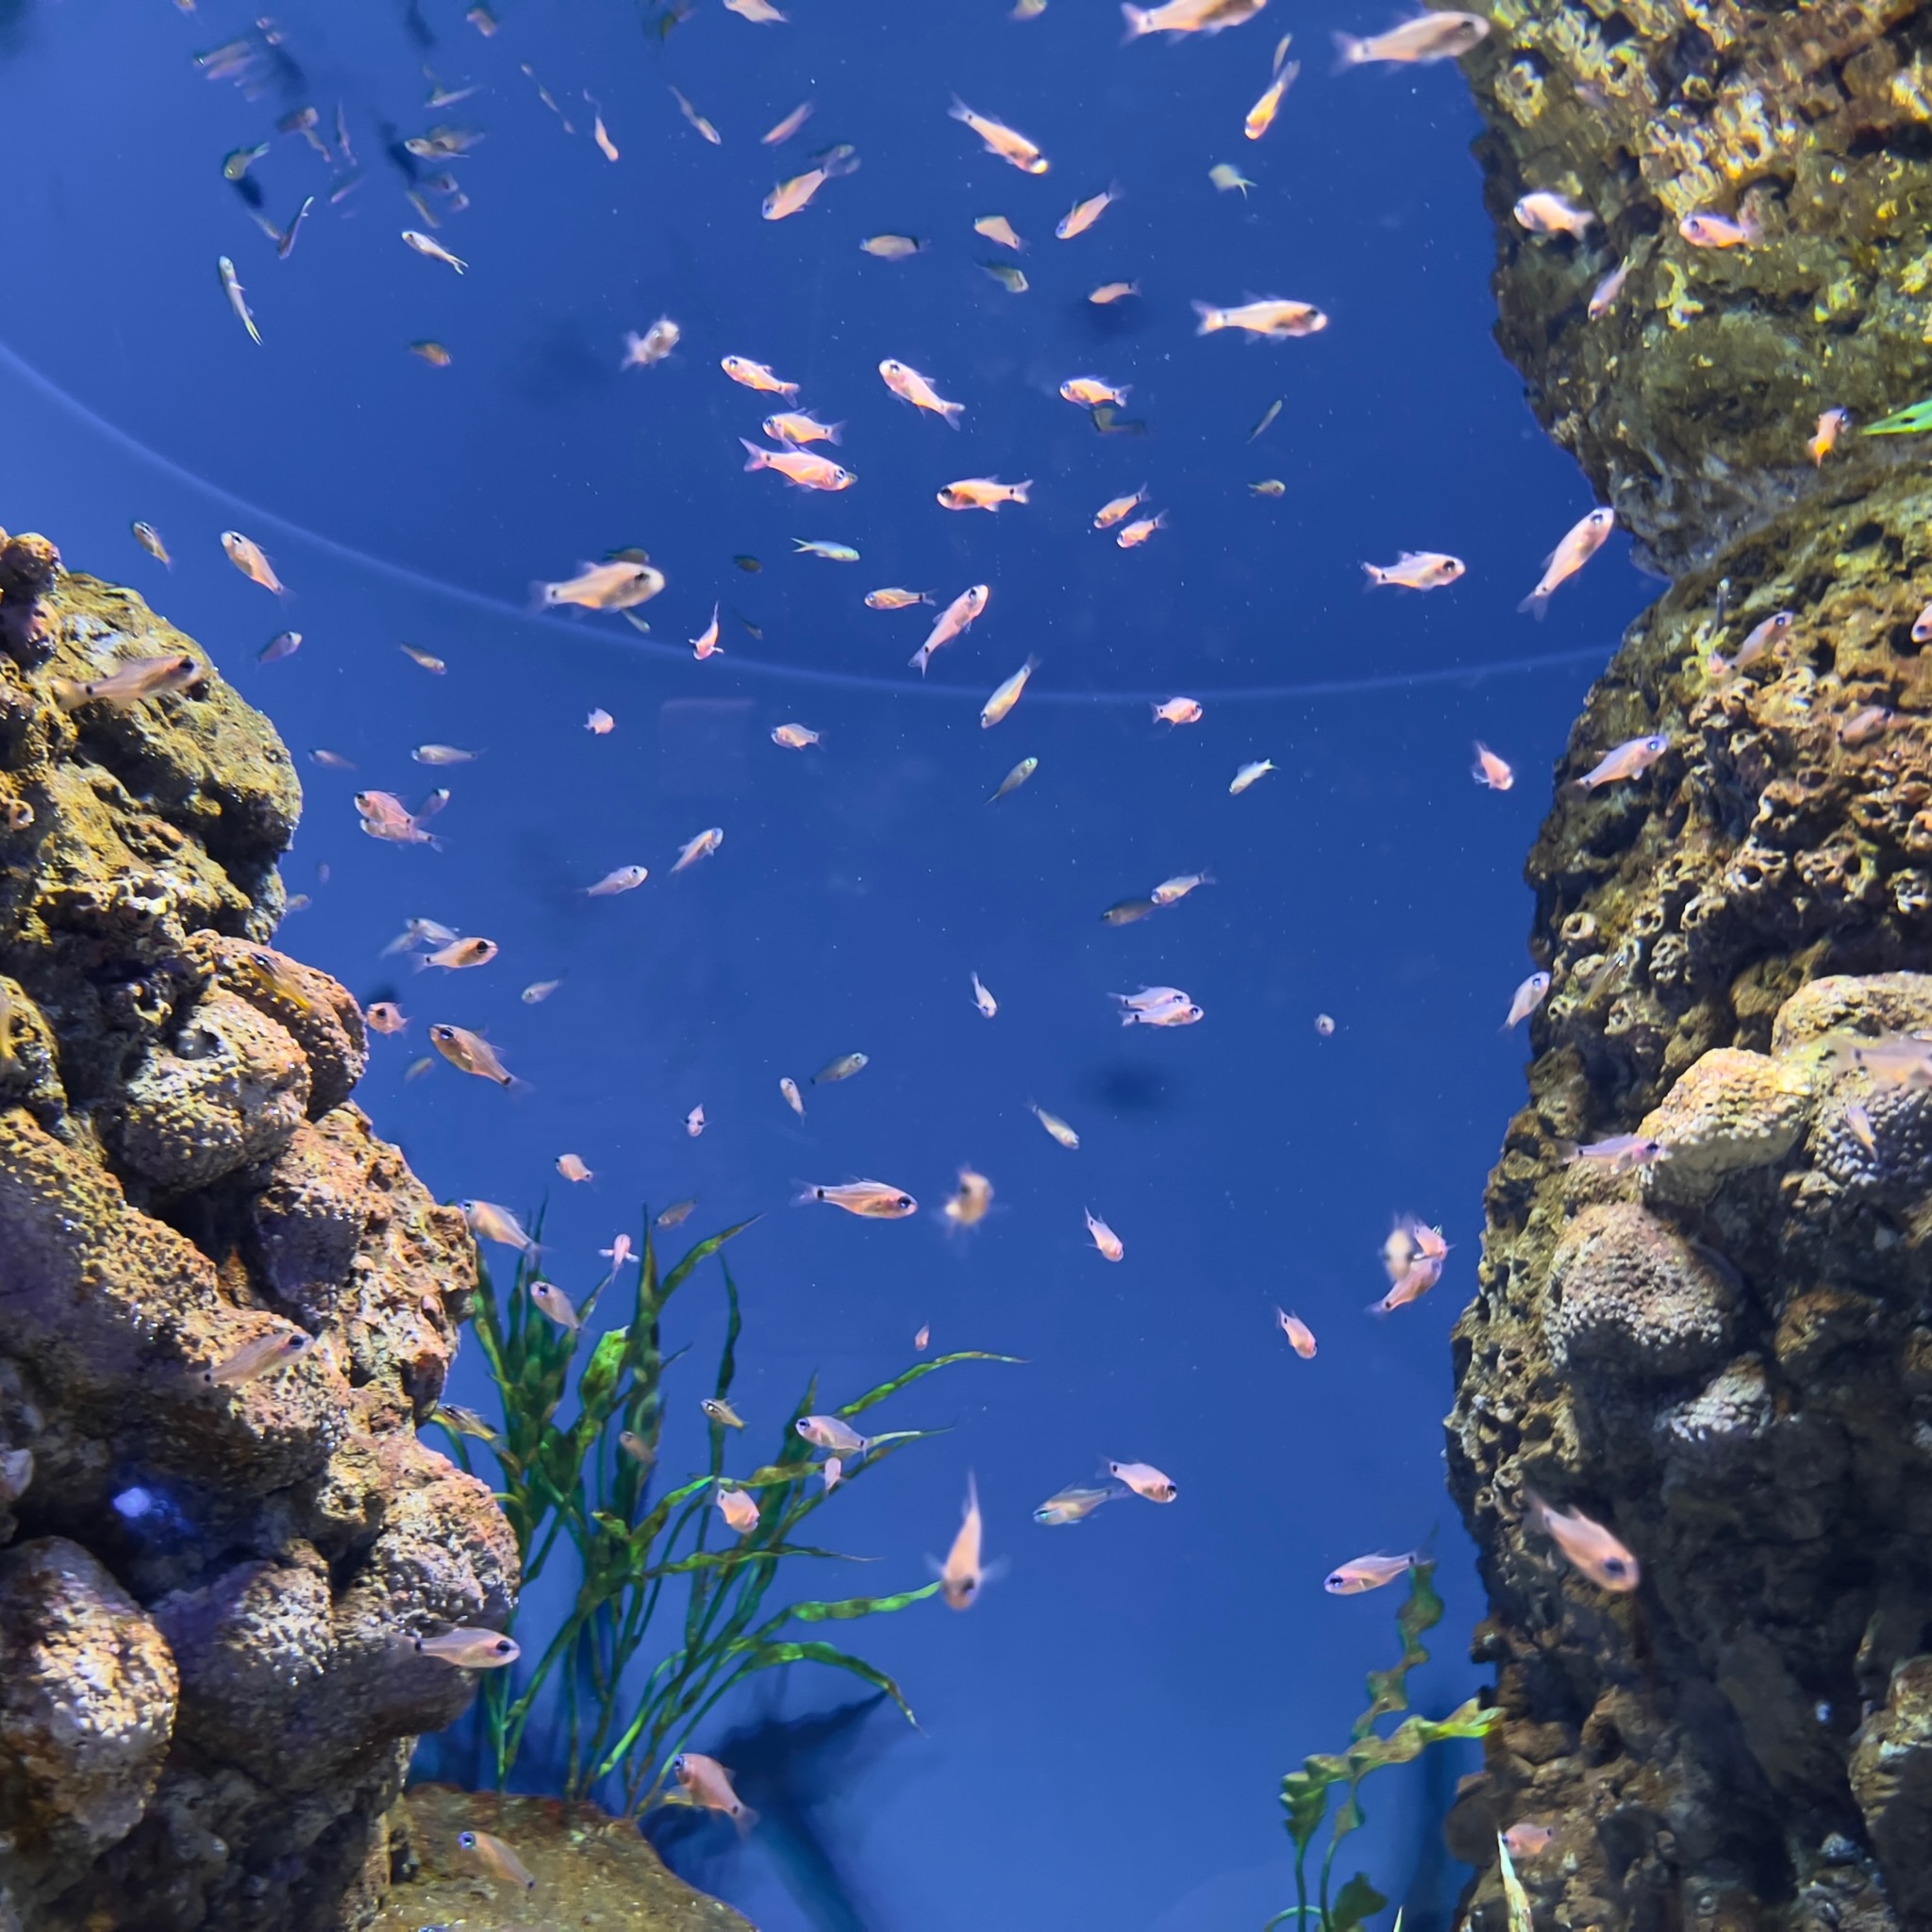 Oman Aquarium fish tank